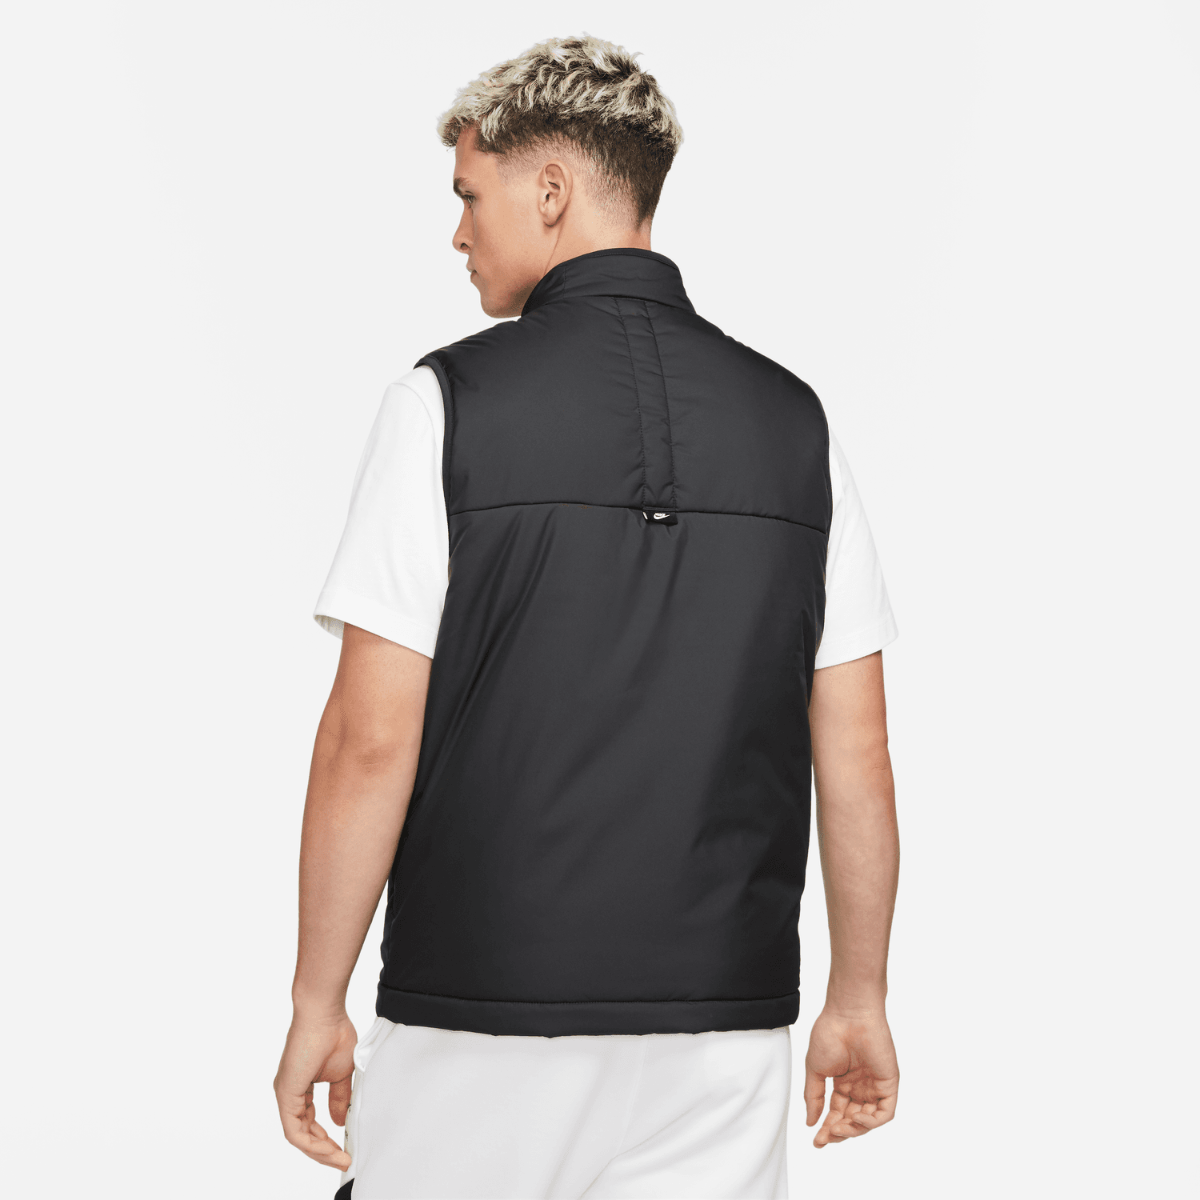 Nike Sportswear Gilet - Black/White